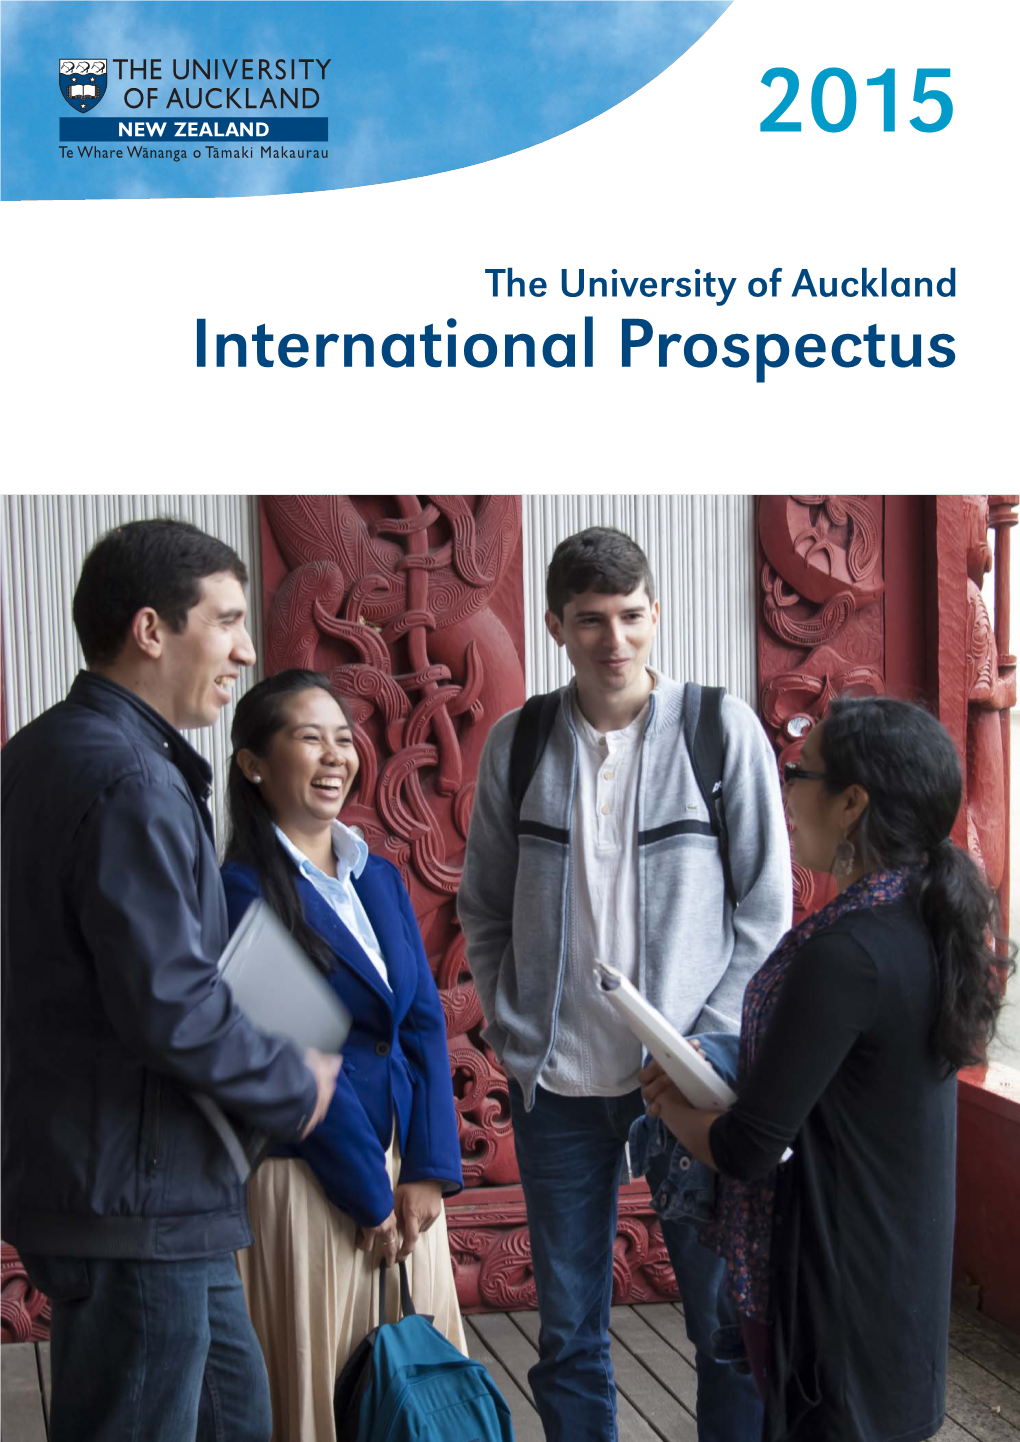 International Prospectus Contents